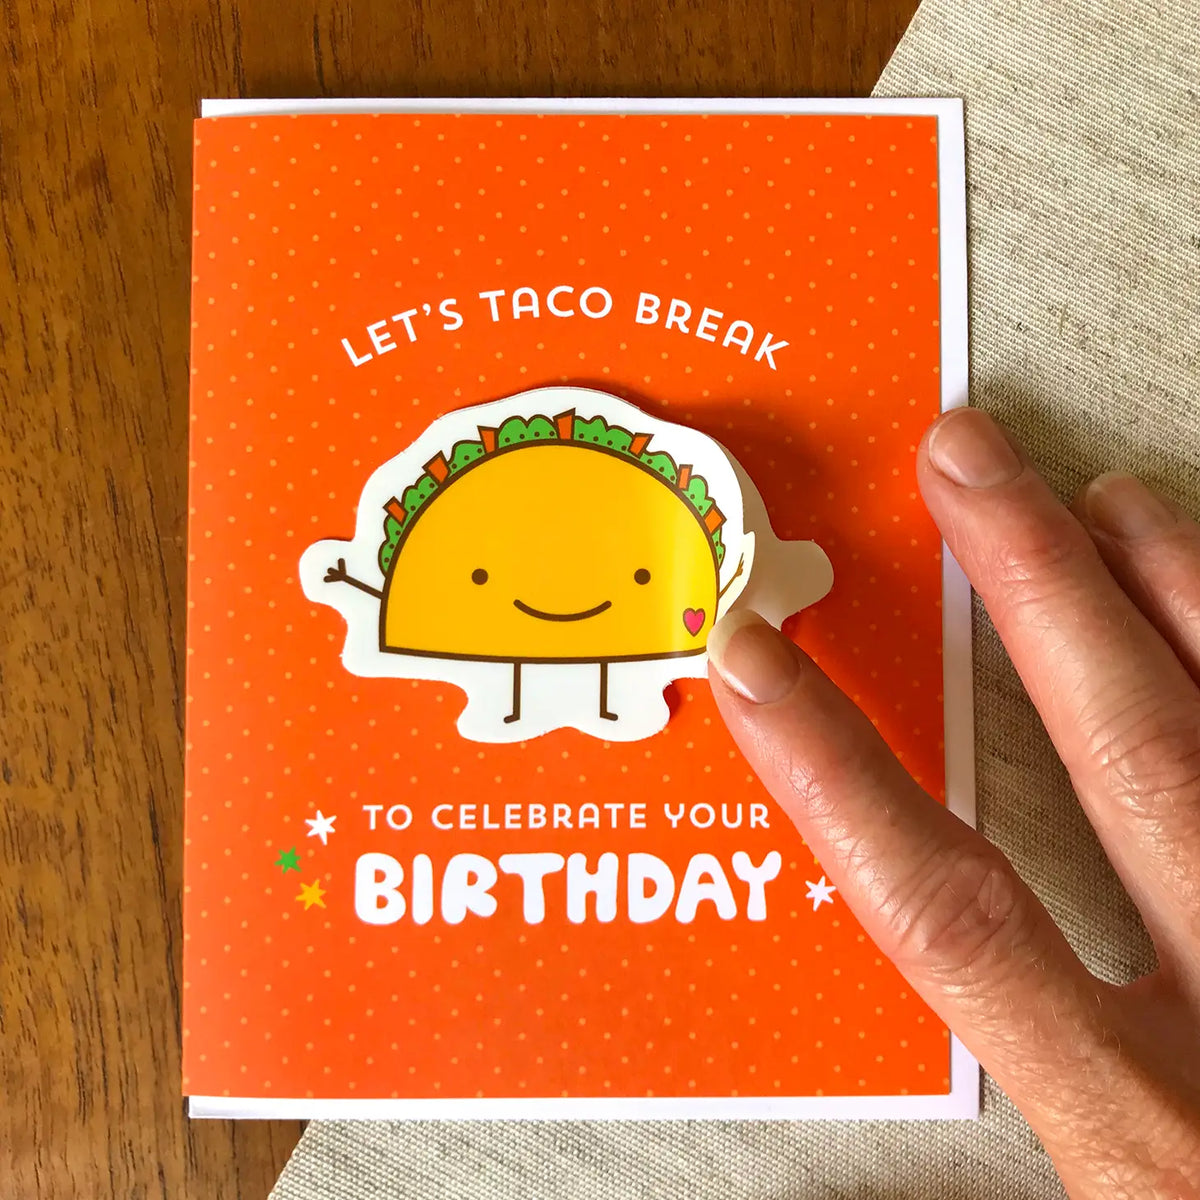 Taco Break Birthday Card Cover